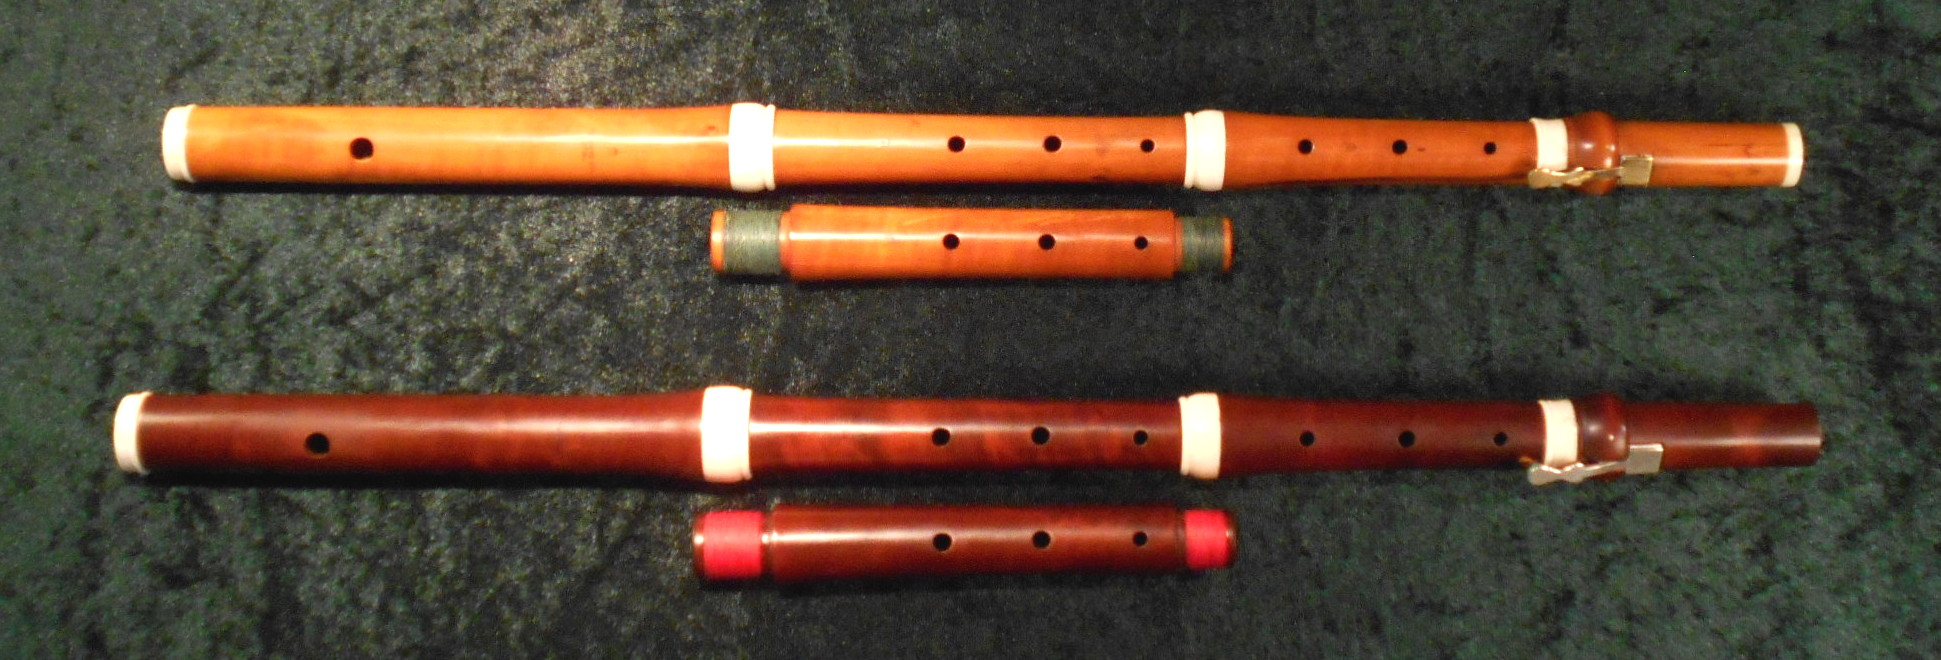 Baroque flute, Tuerlinckx model